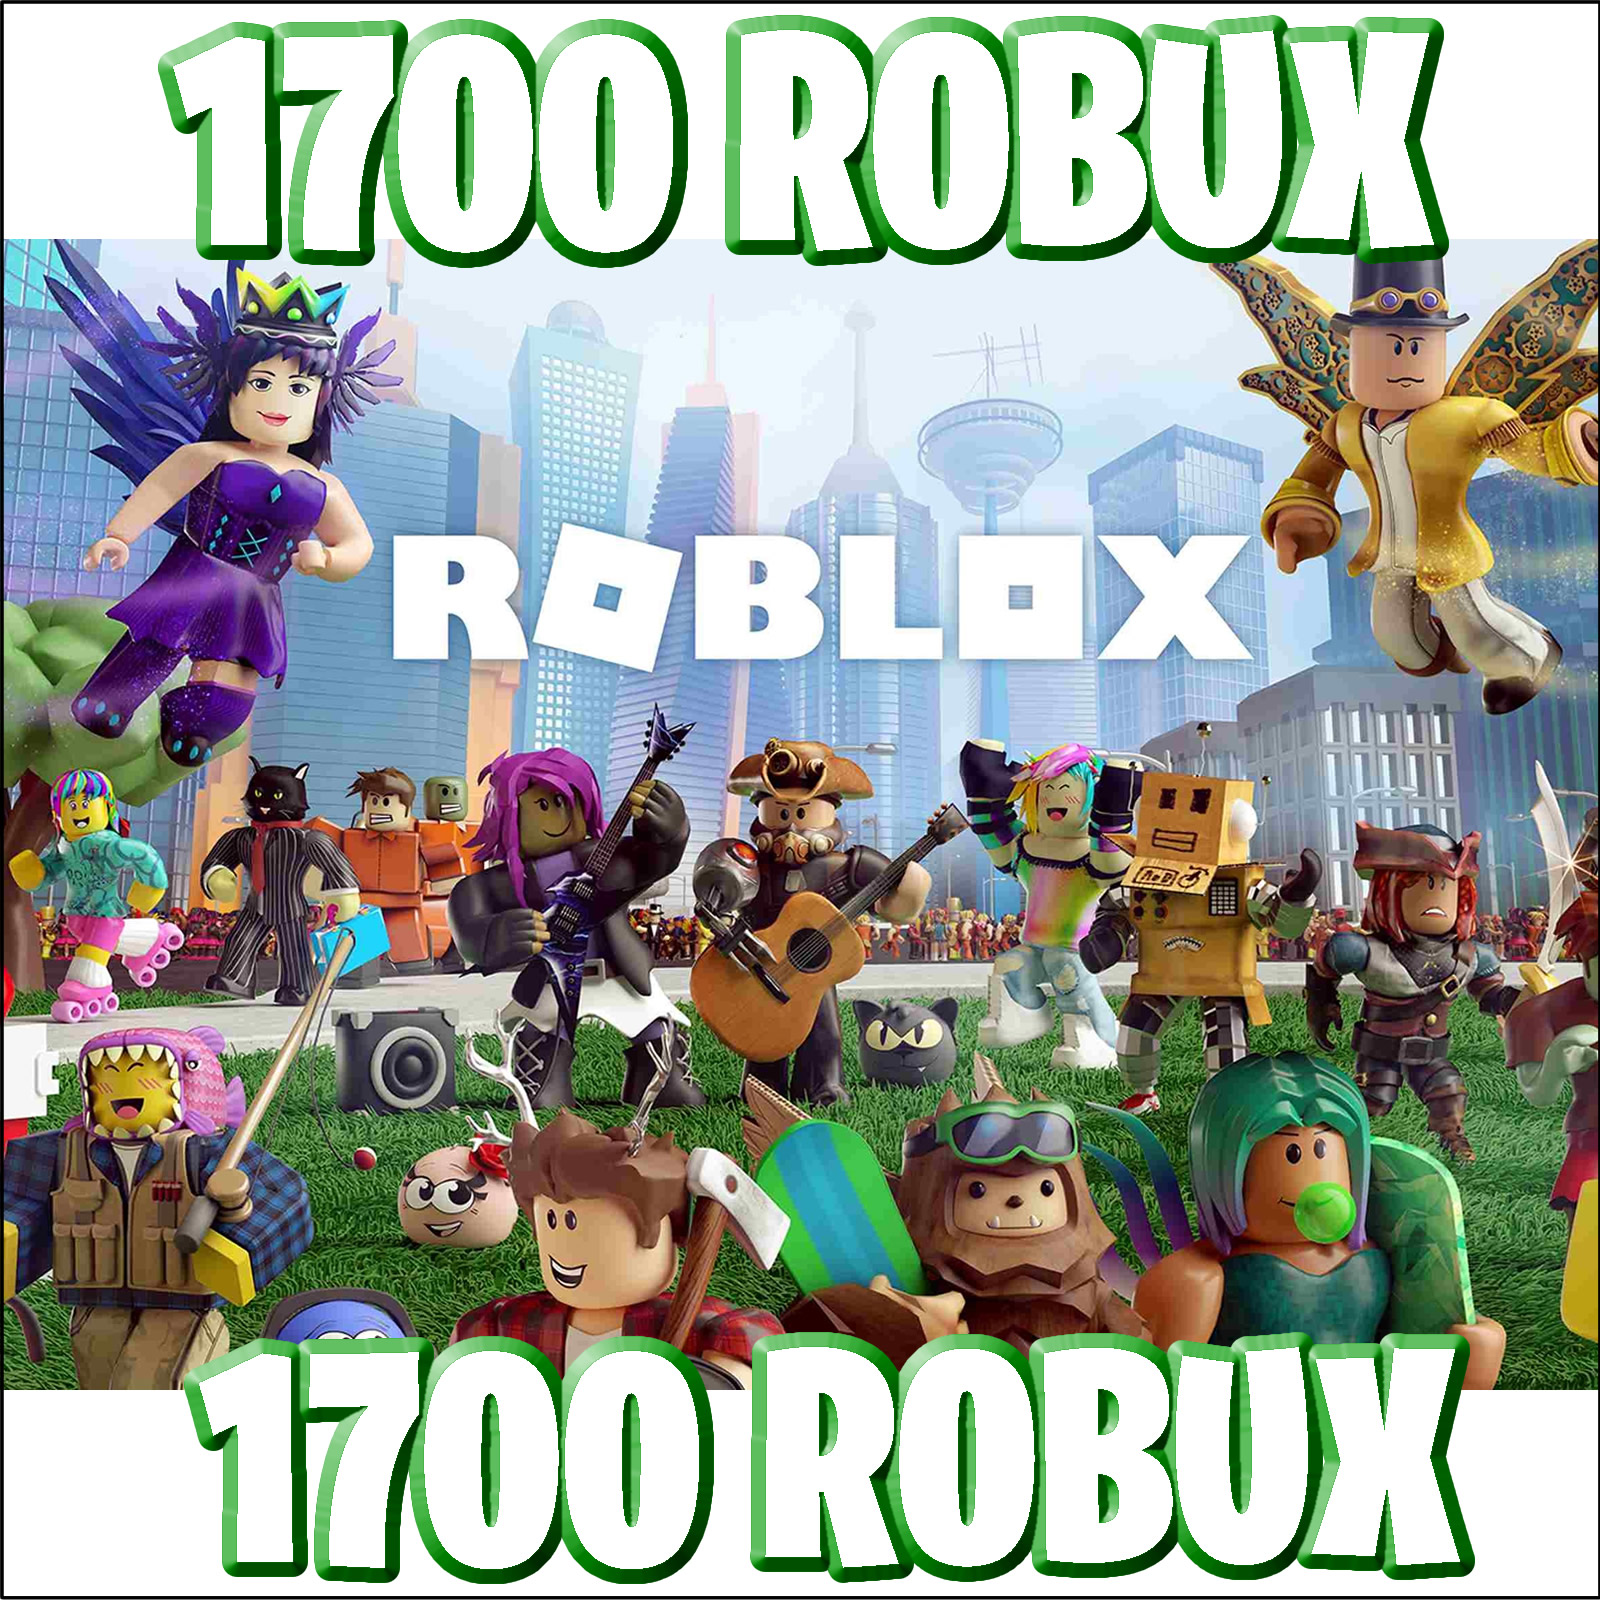 roblox 1700 robux pc